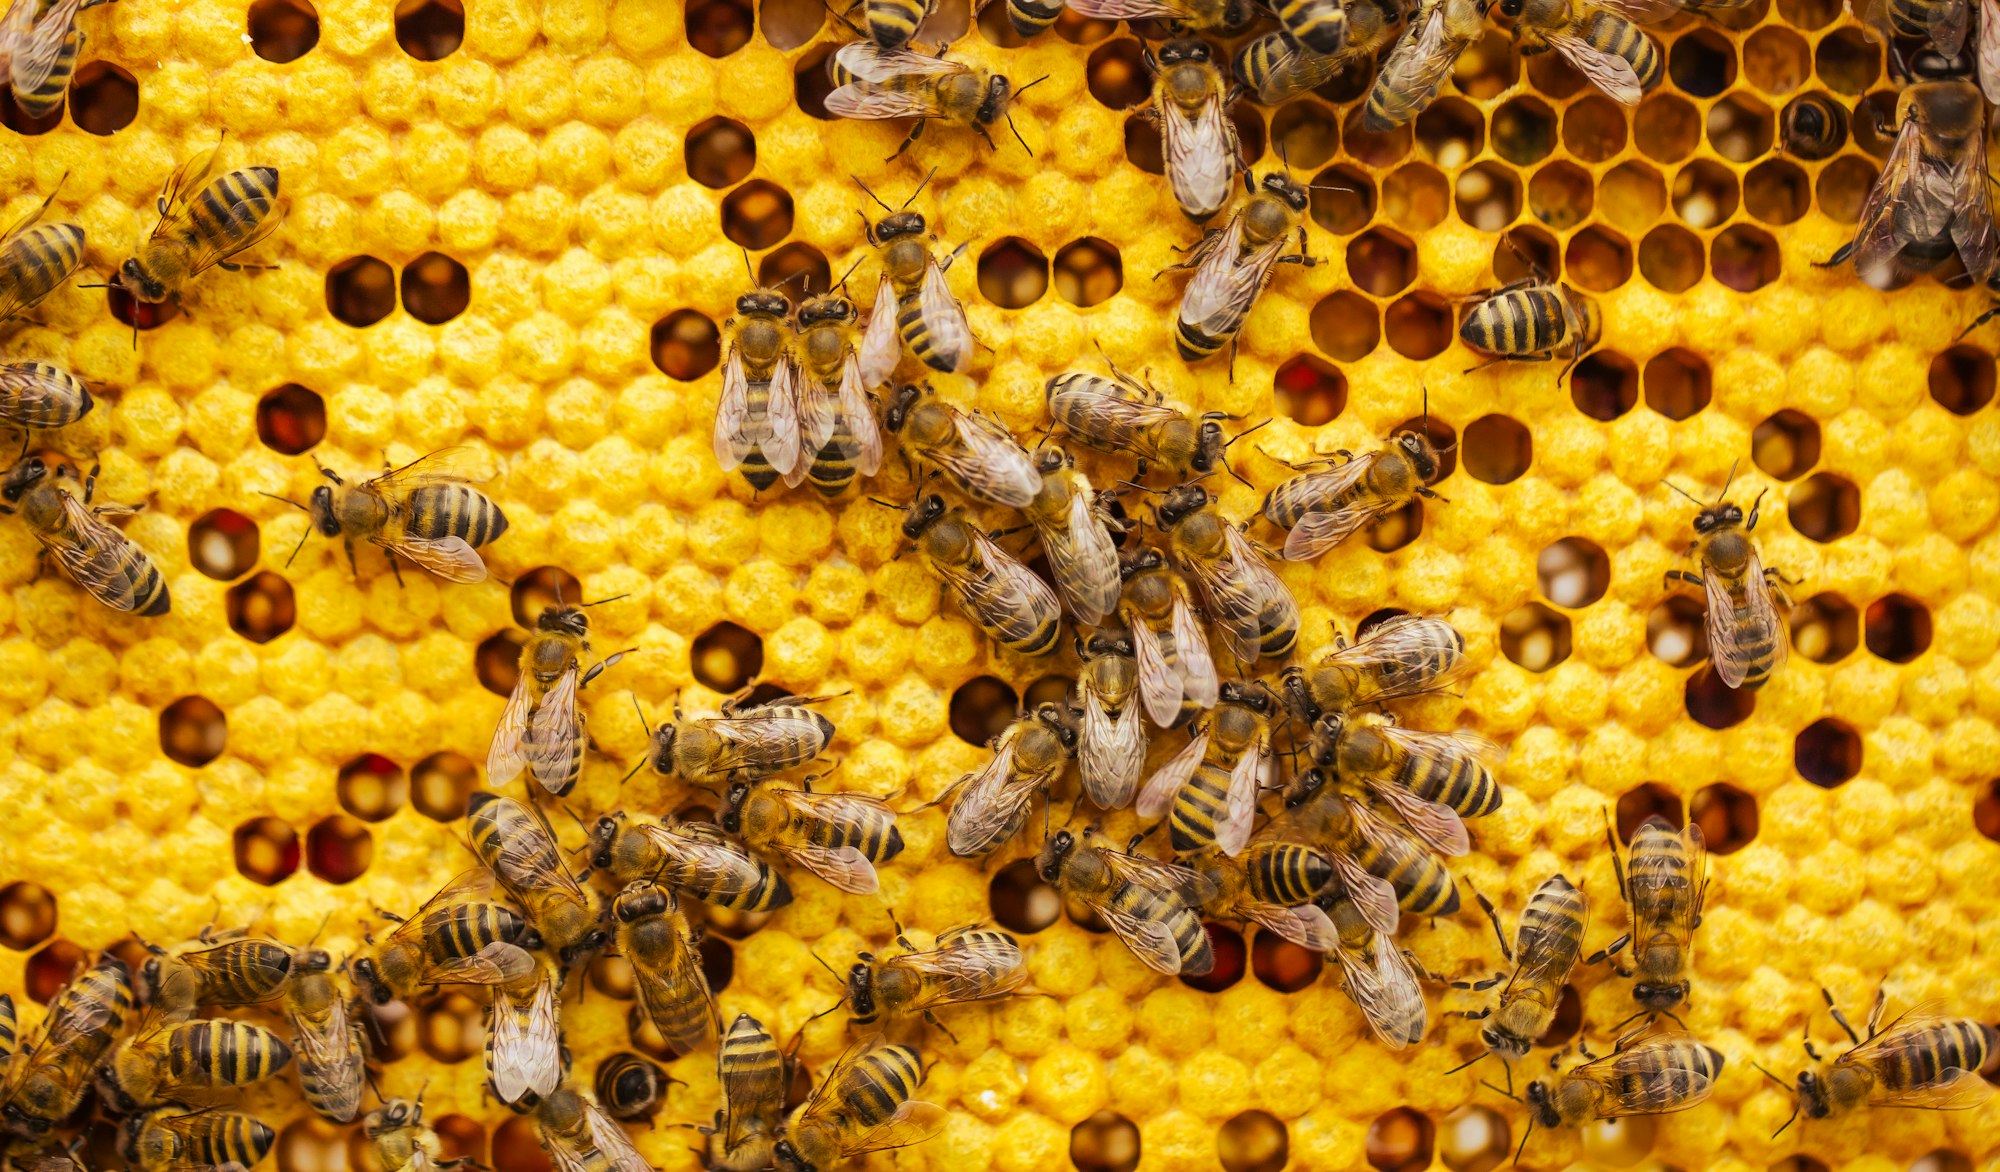 Hemp prolongs the Life of Honey Bees, according to a New Study